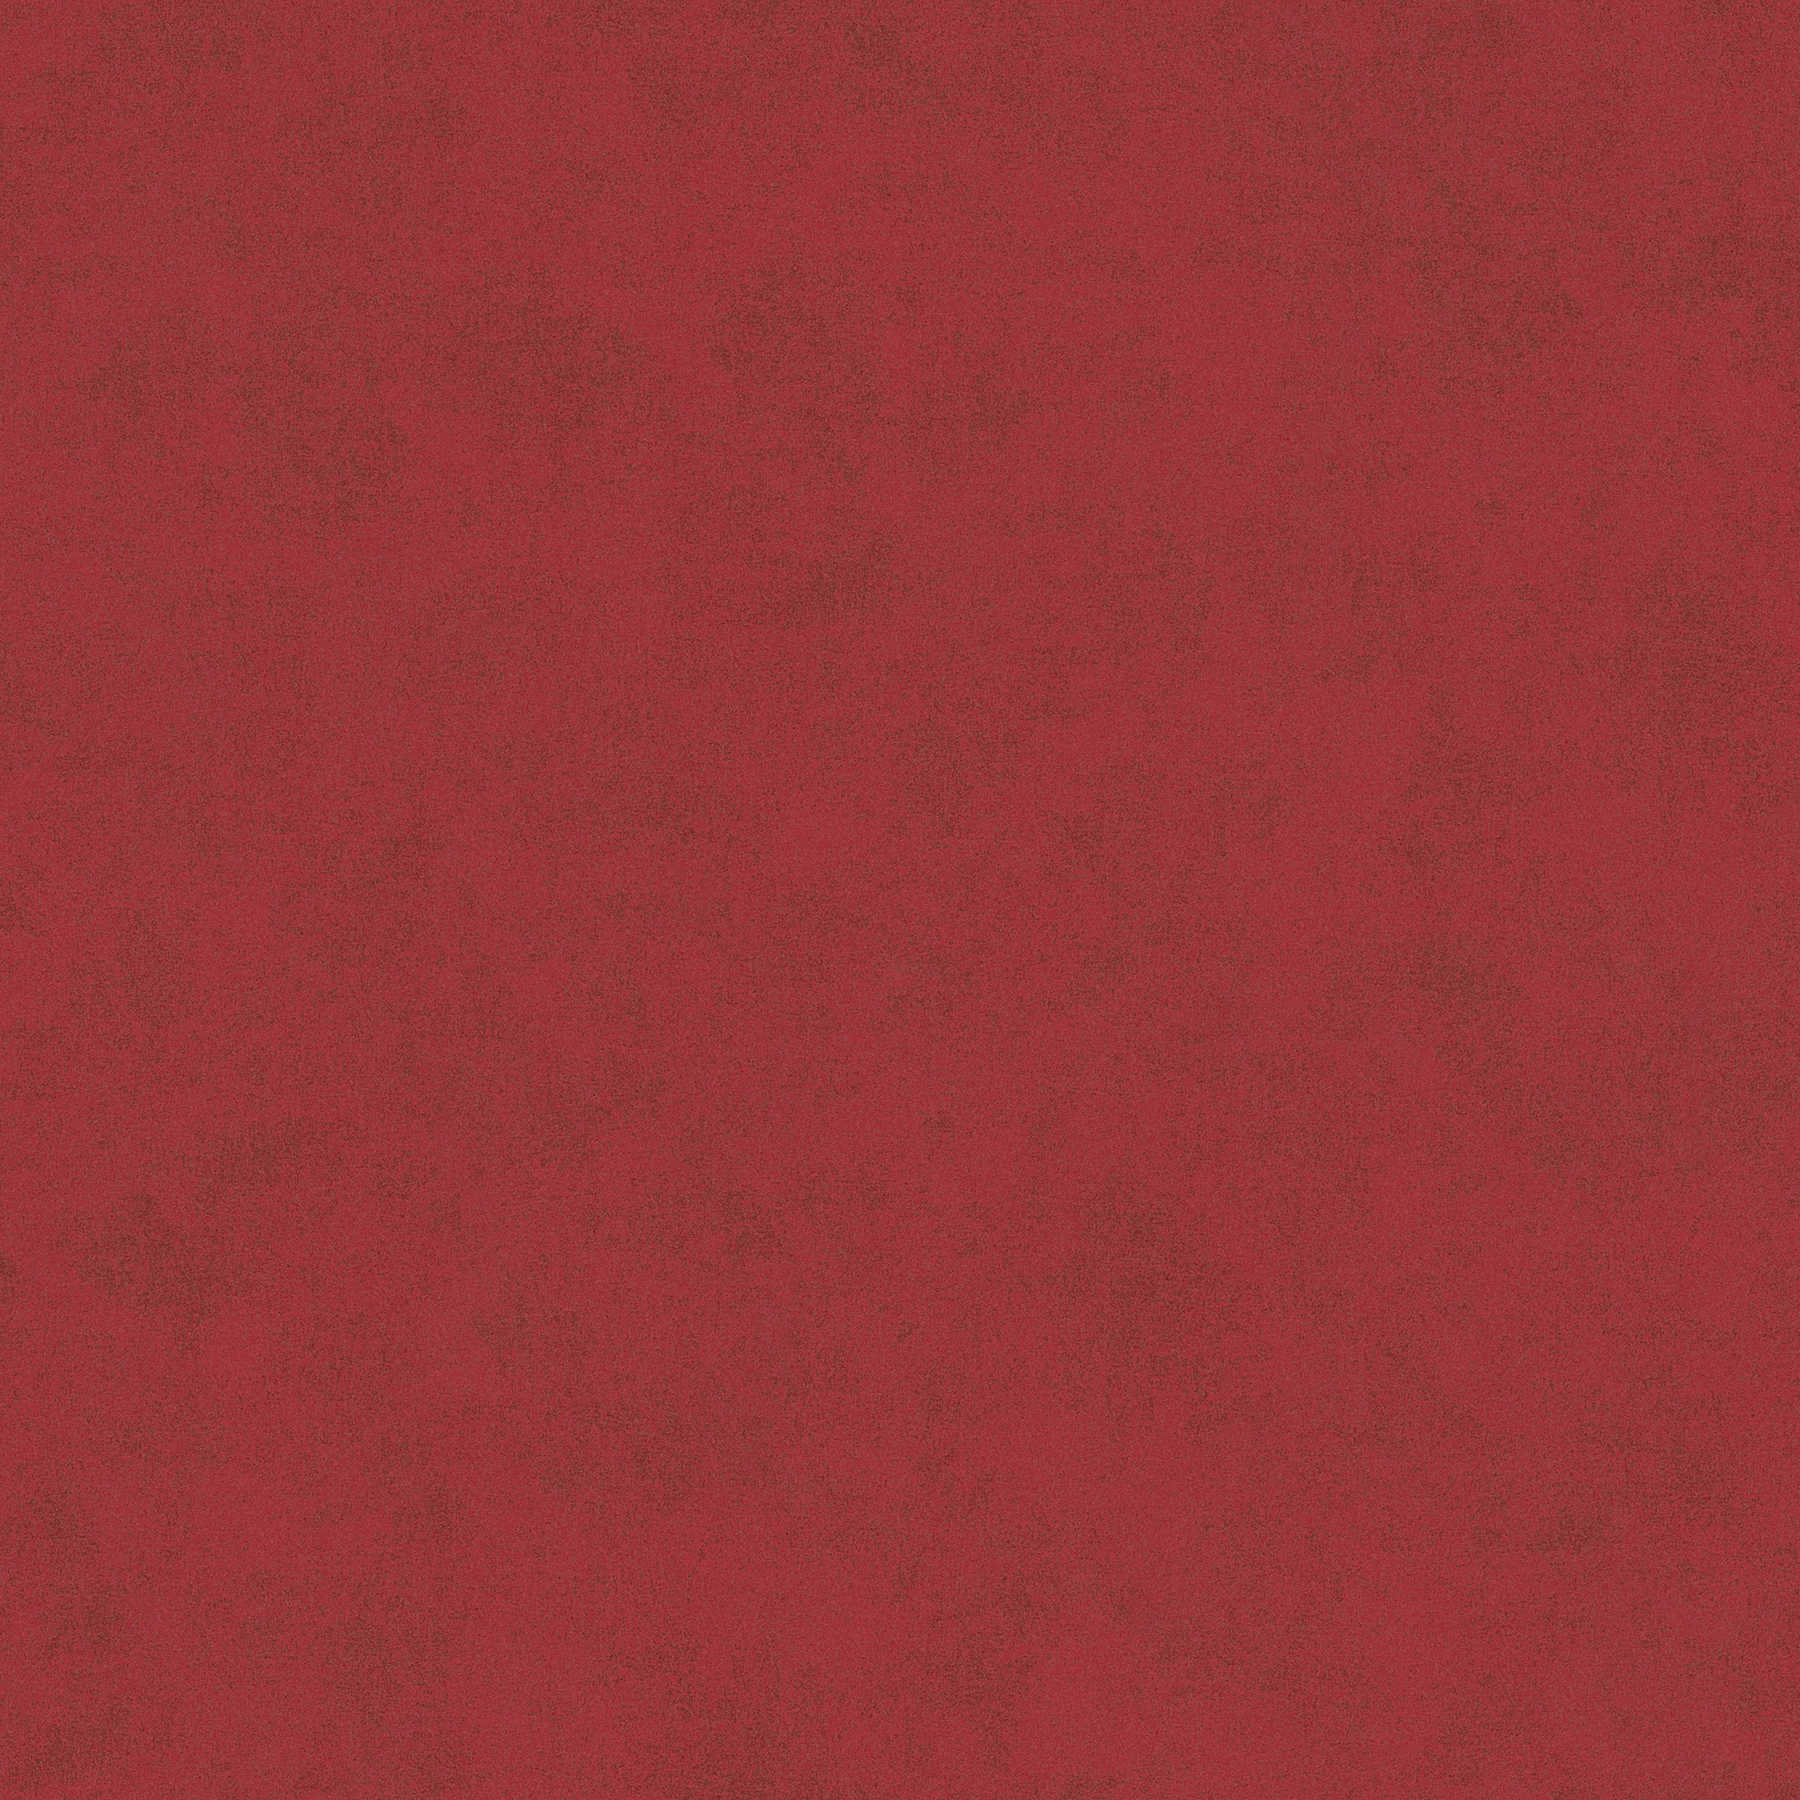         Unifarbene Vliestapete mit melierter Struktur – Rot
    